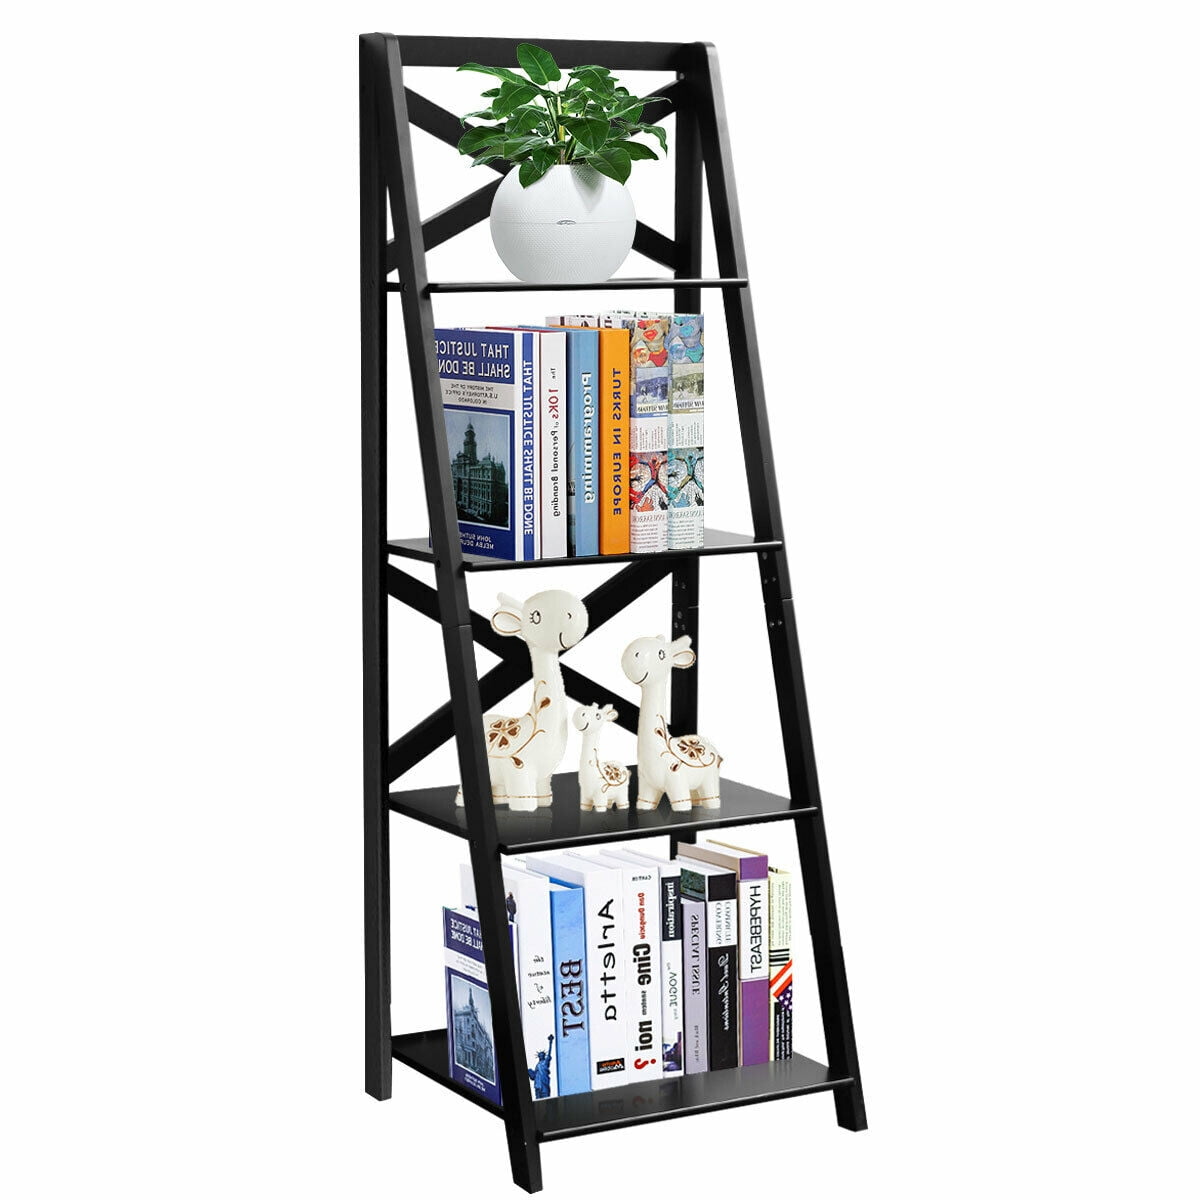 4-Tiers Leaning Ladder Bookshelf Shelving Storage Organizer Display Shelf Stand 